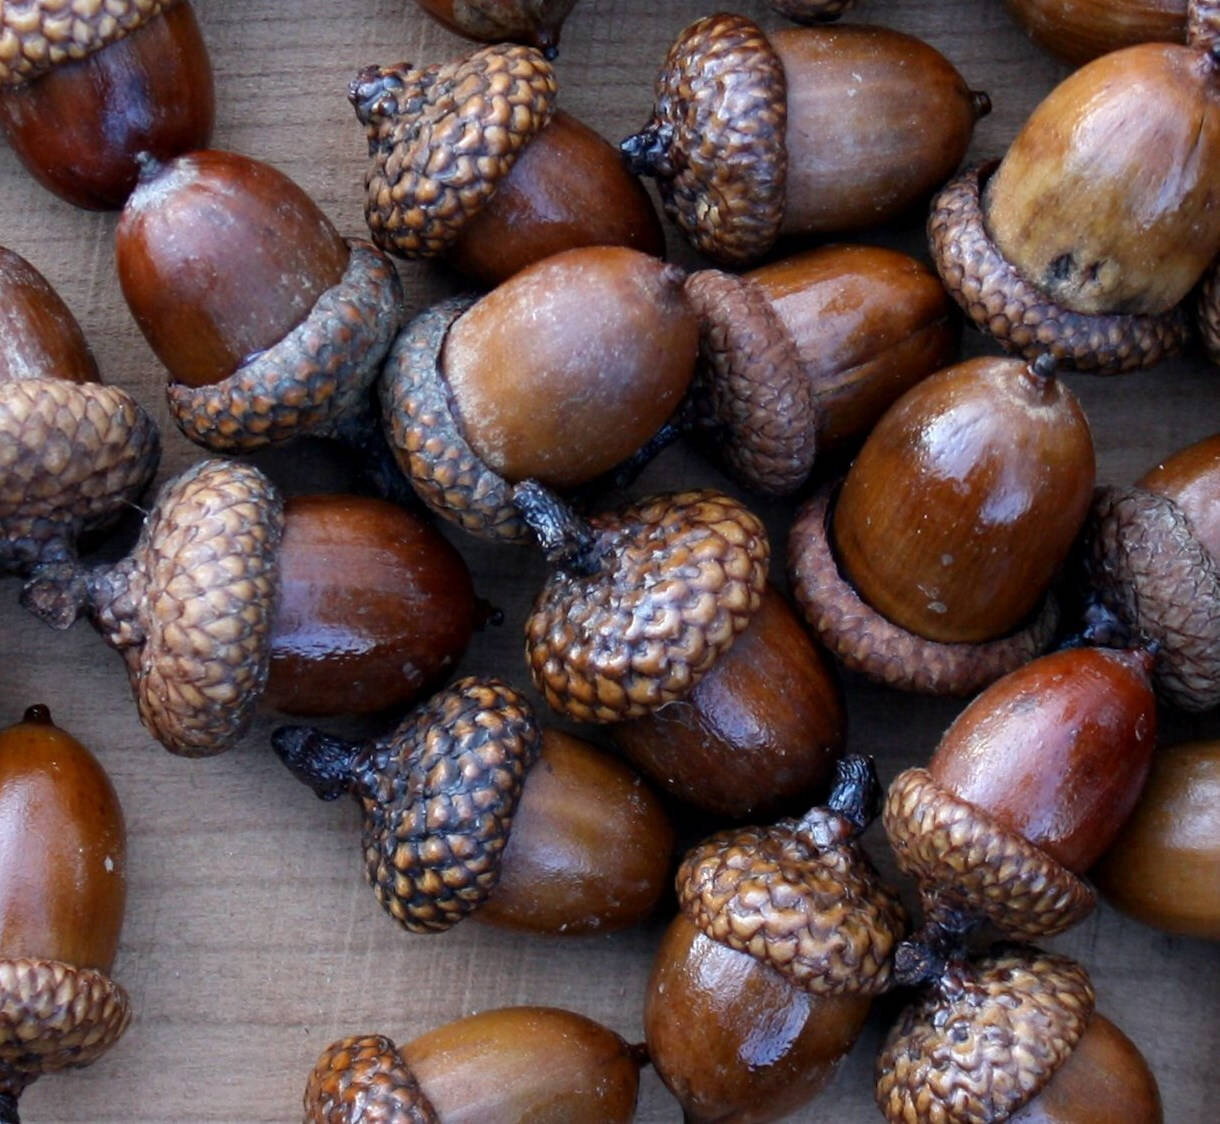 Acorns Large with Caps - Autumn crafts, decorations, DIY Rustic Wedding  supplies- Vase Filler- Clean & dried- Best acorns — Rusticcraft Designs